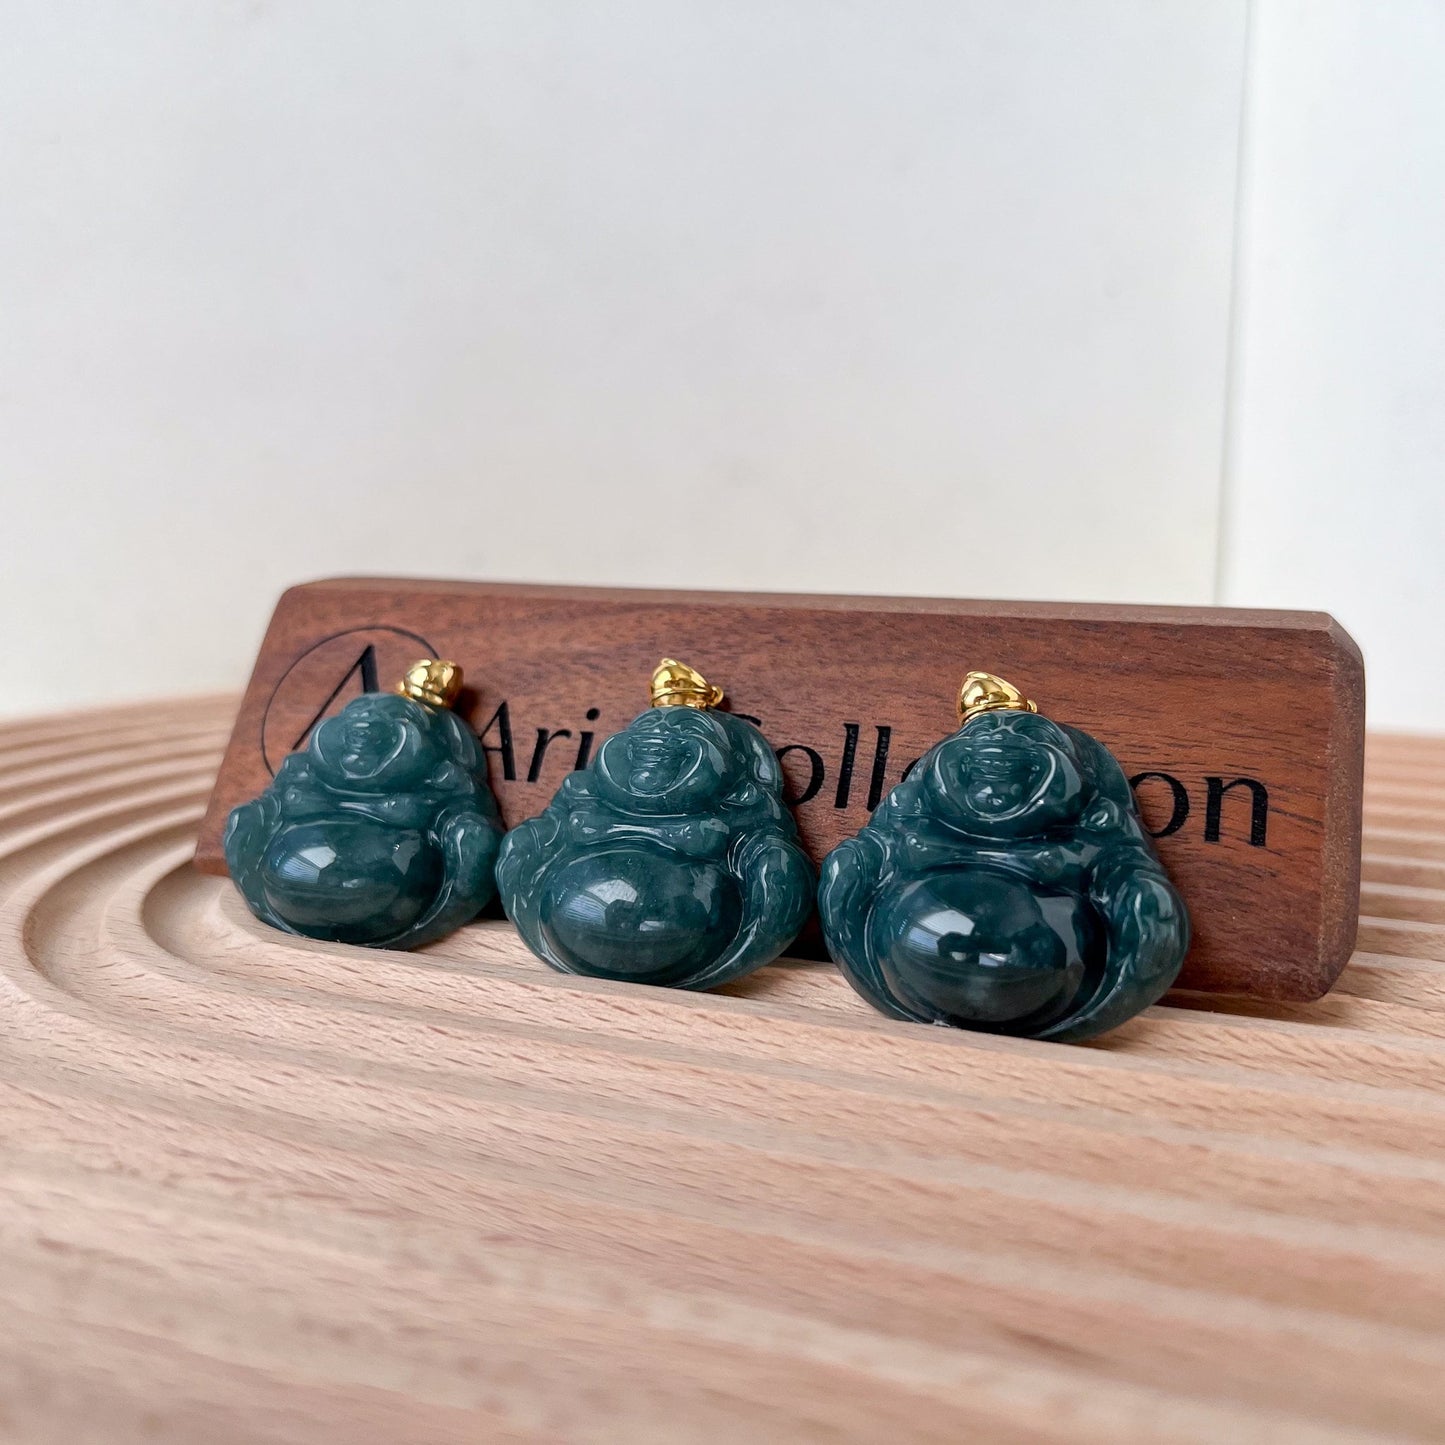 Blue Green Happy Buddha Jadeite Jade with 18K Solid Gold Pendant, NY-0723-1703382283